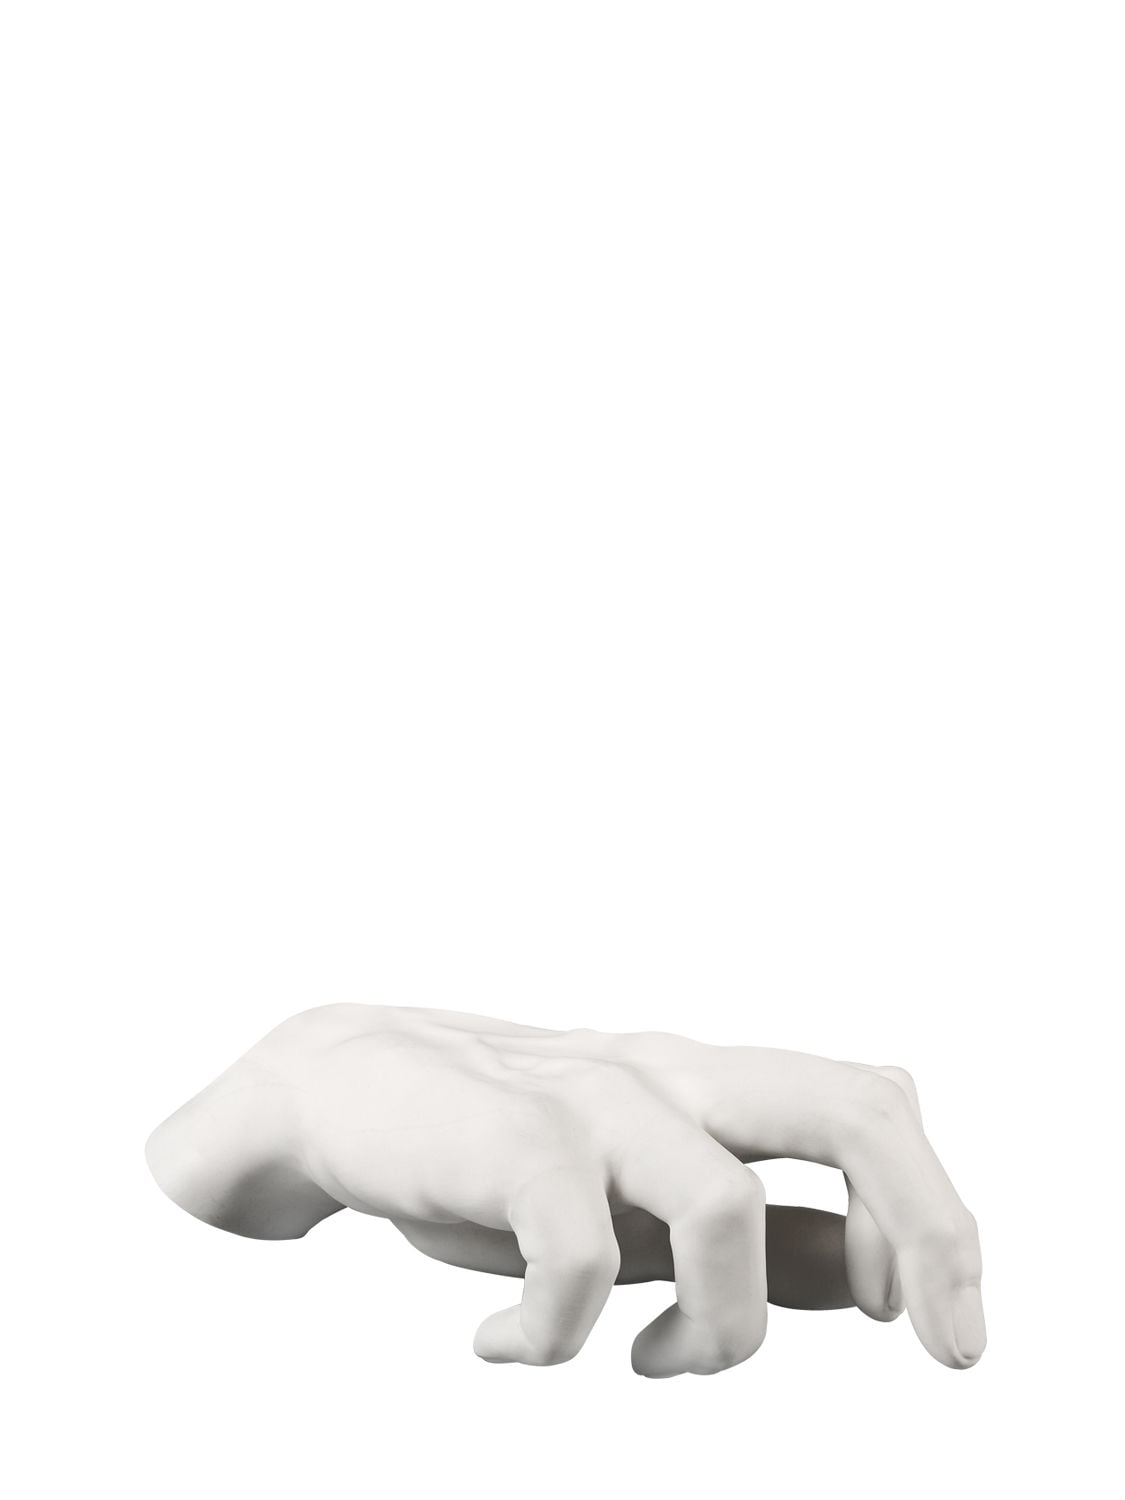 Image of Memorabilia Mvsevm Porcelain Male Hand